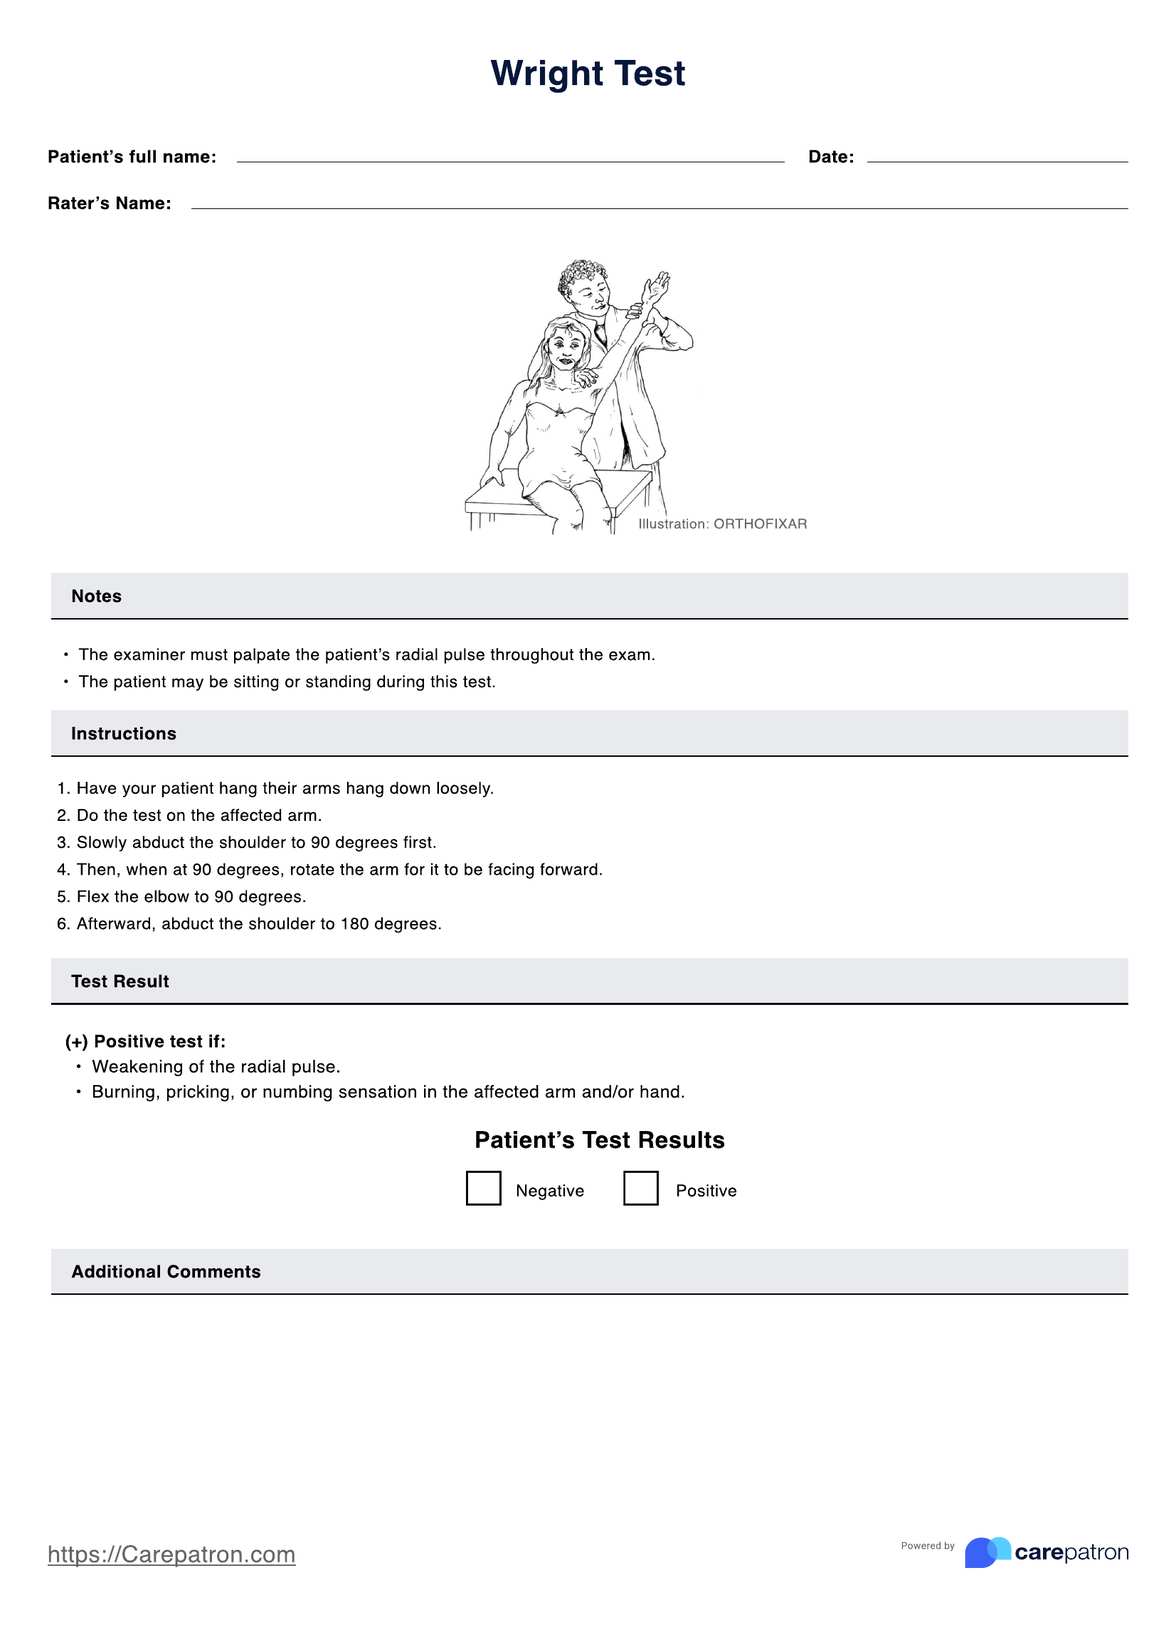 Wright Test PDF Example